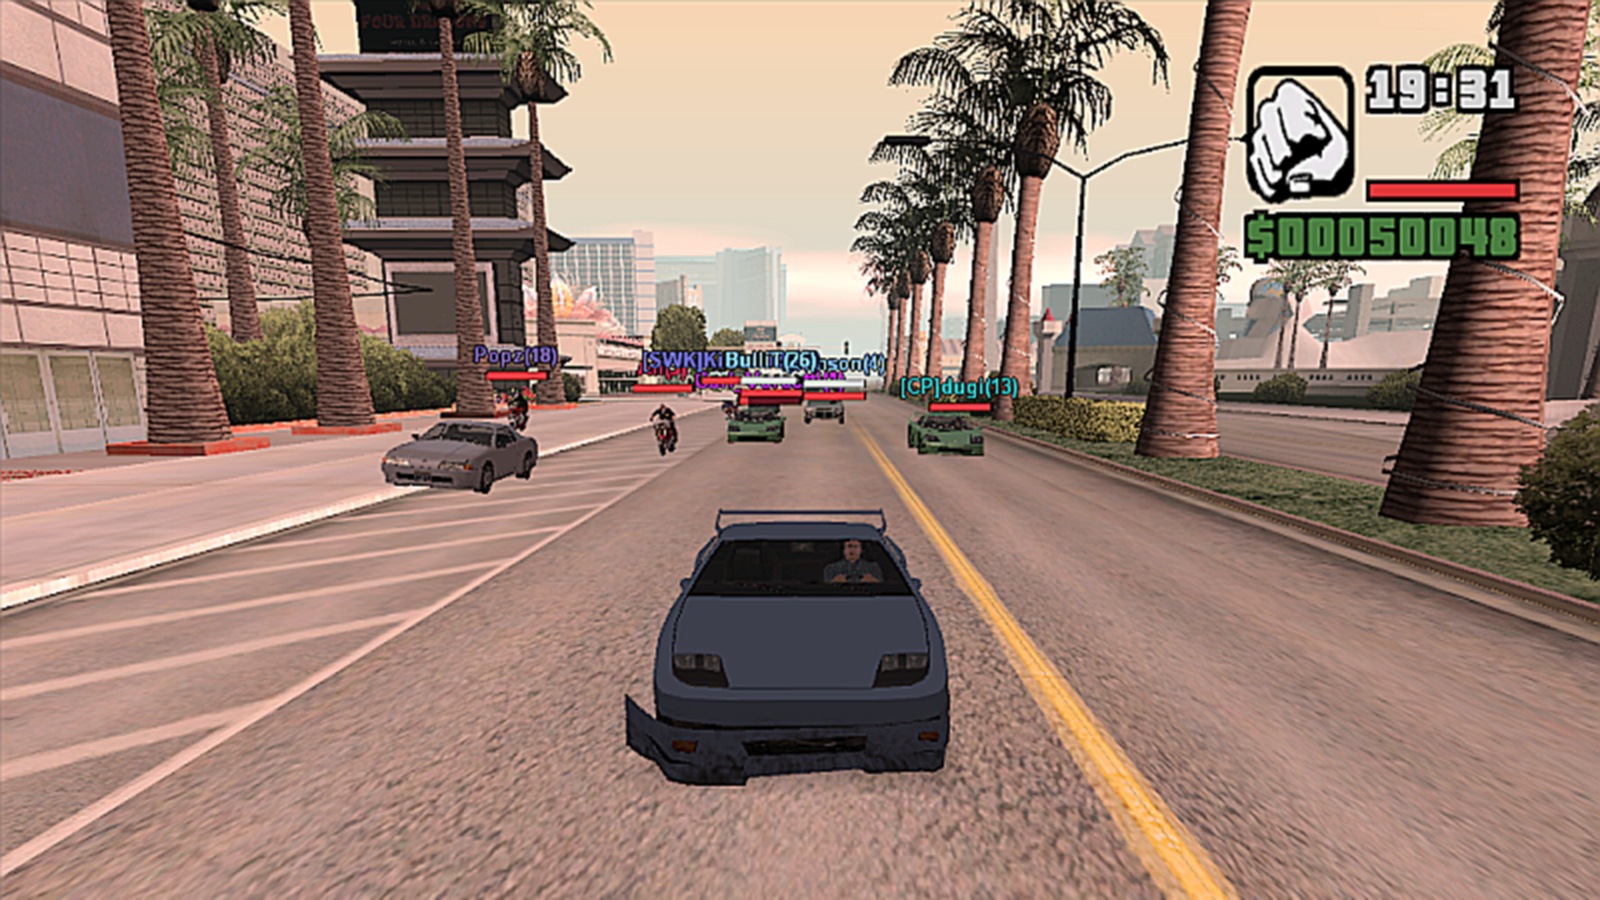 GTA: San Andreas PC Game Free Download 